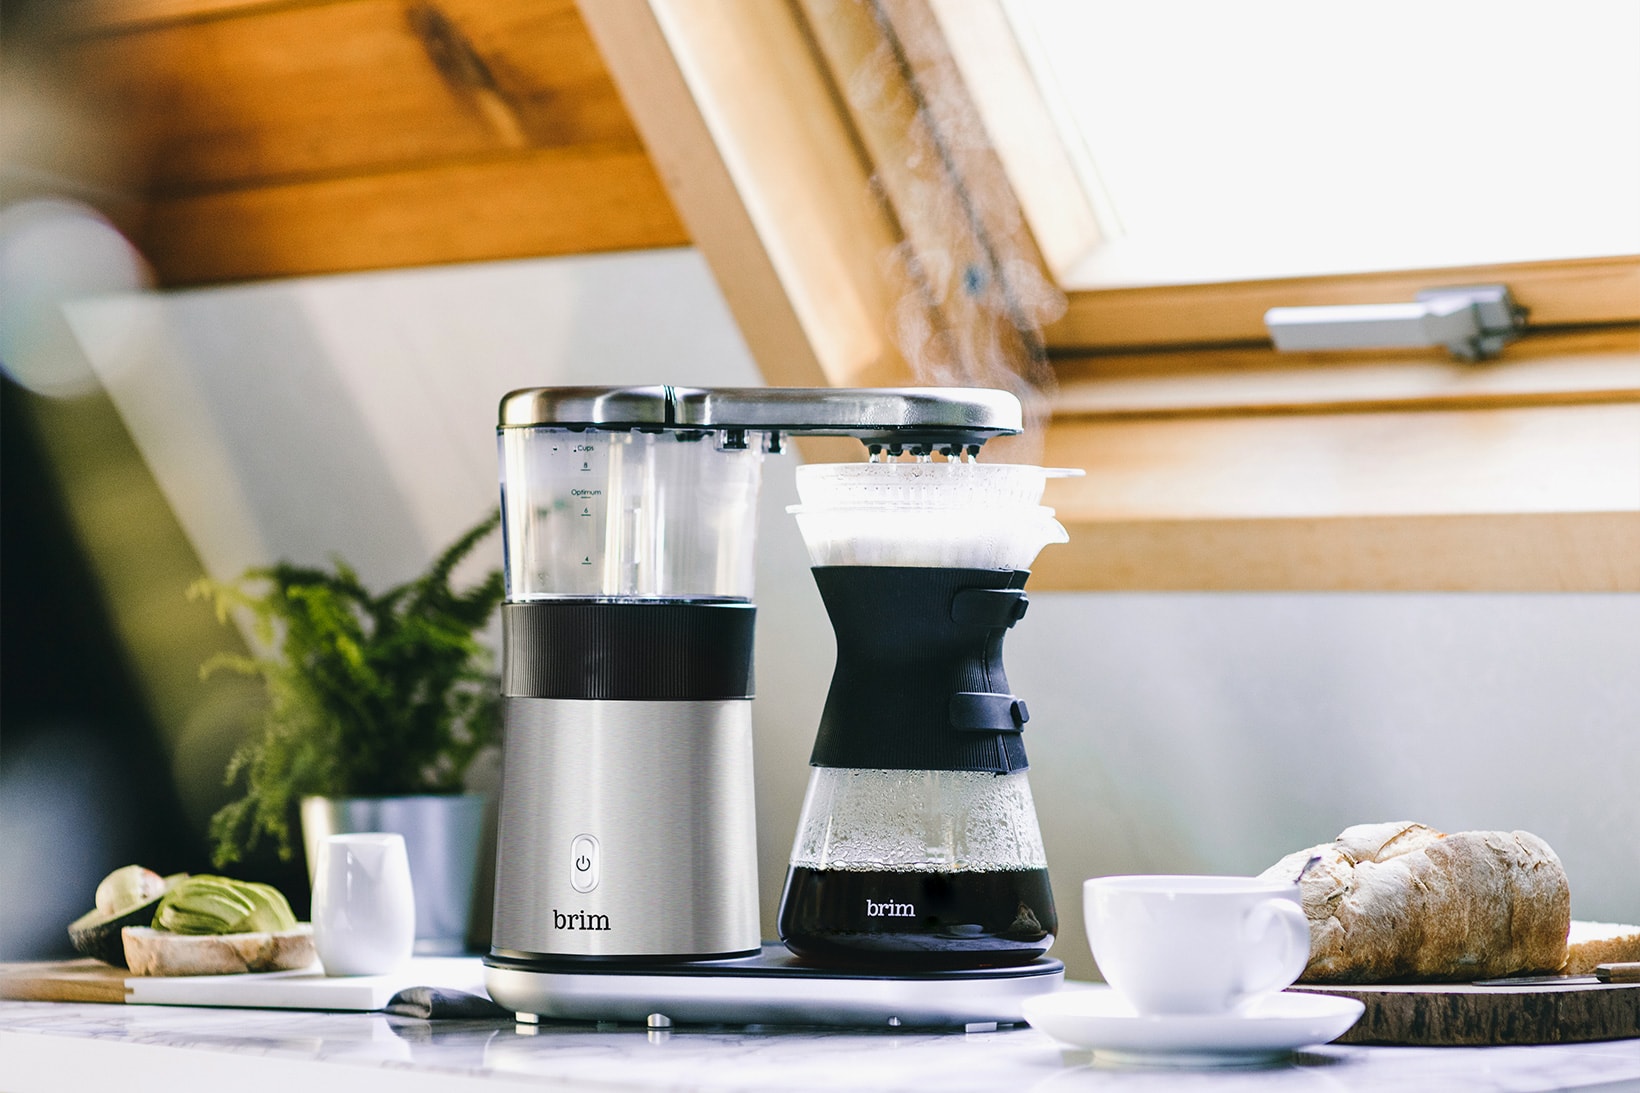 brim pour over coffee maker machine brewed kitchen home appliances price info